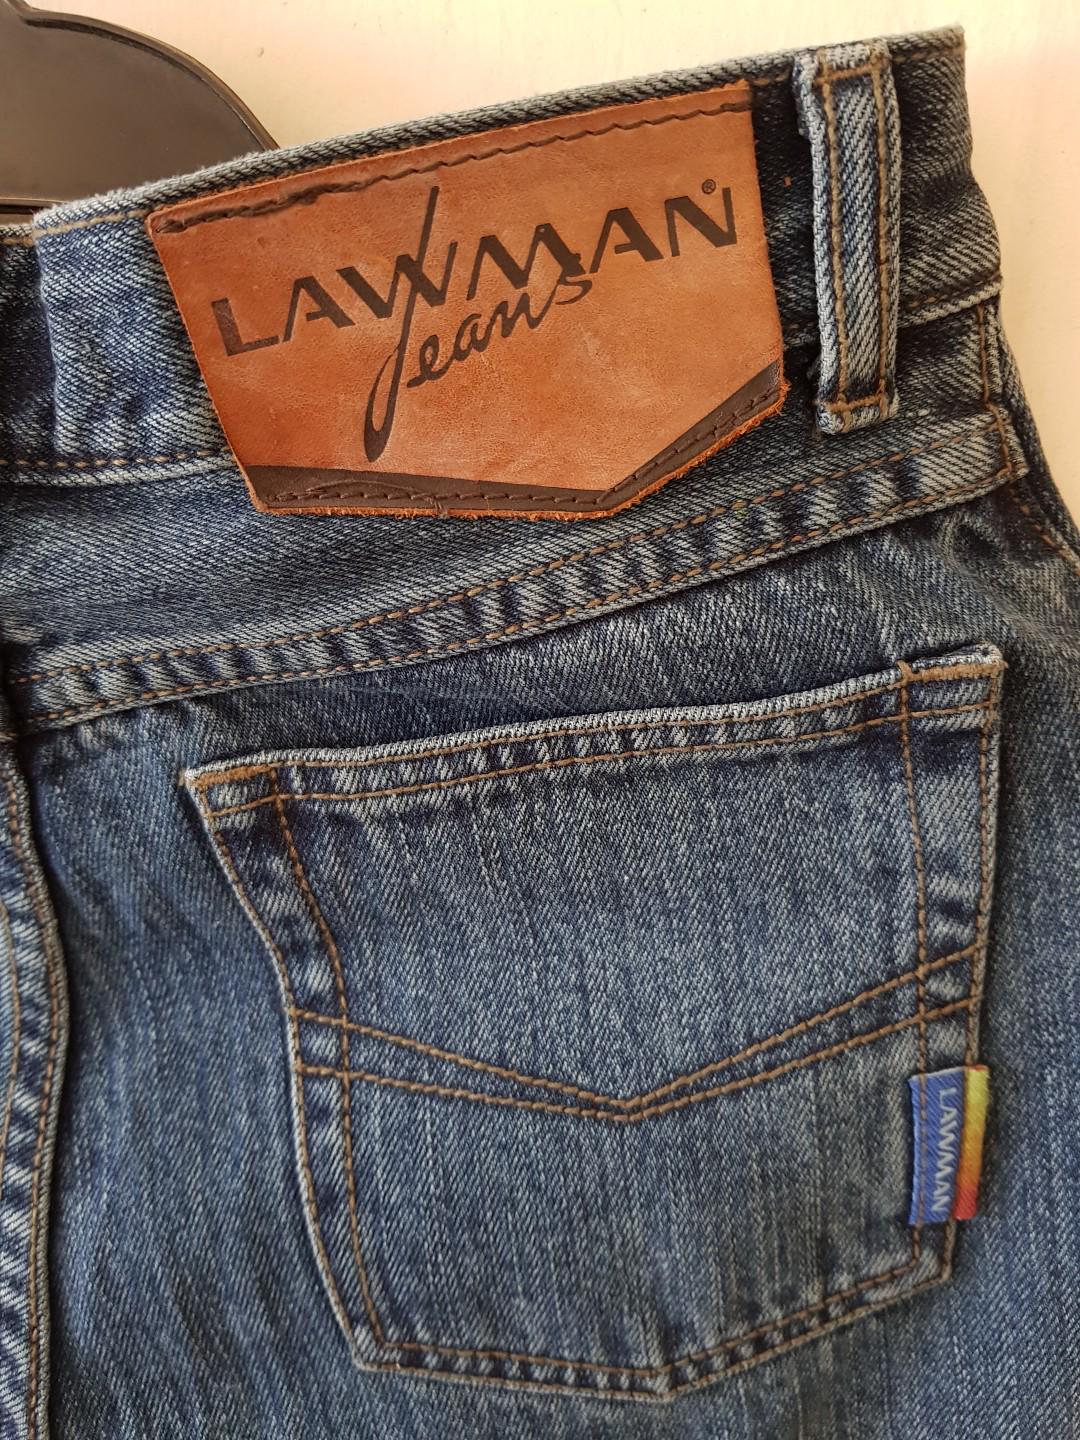 lawman jeans company